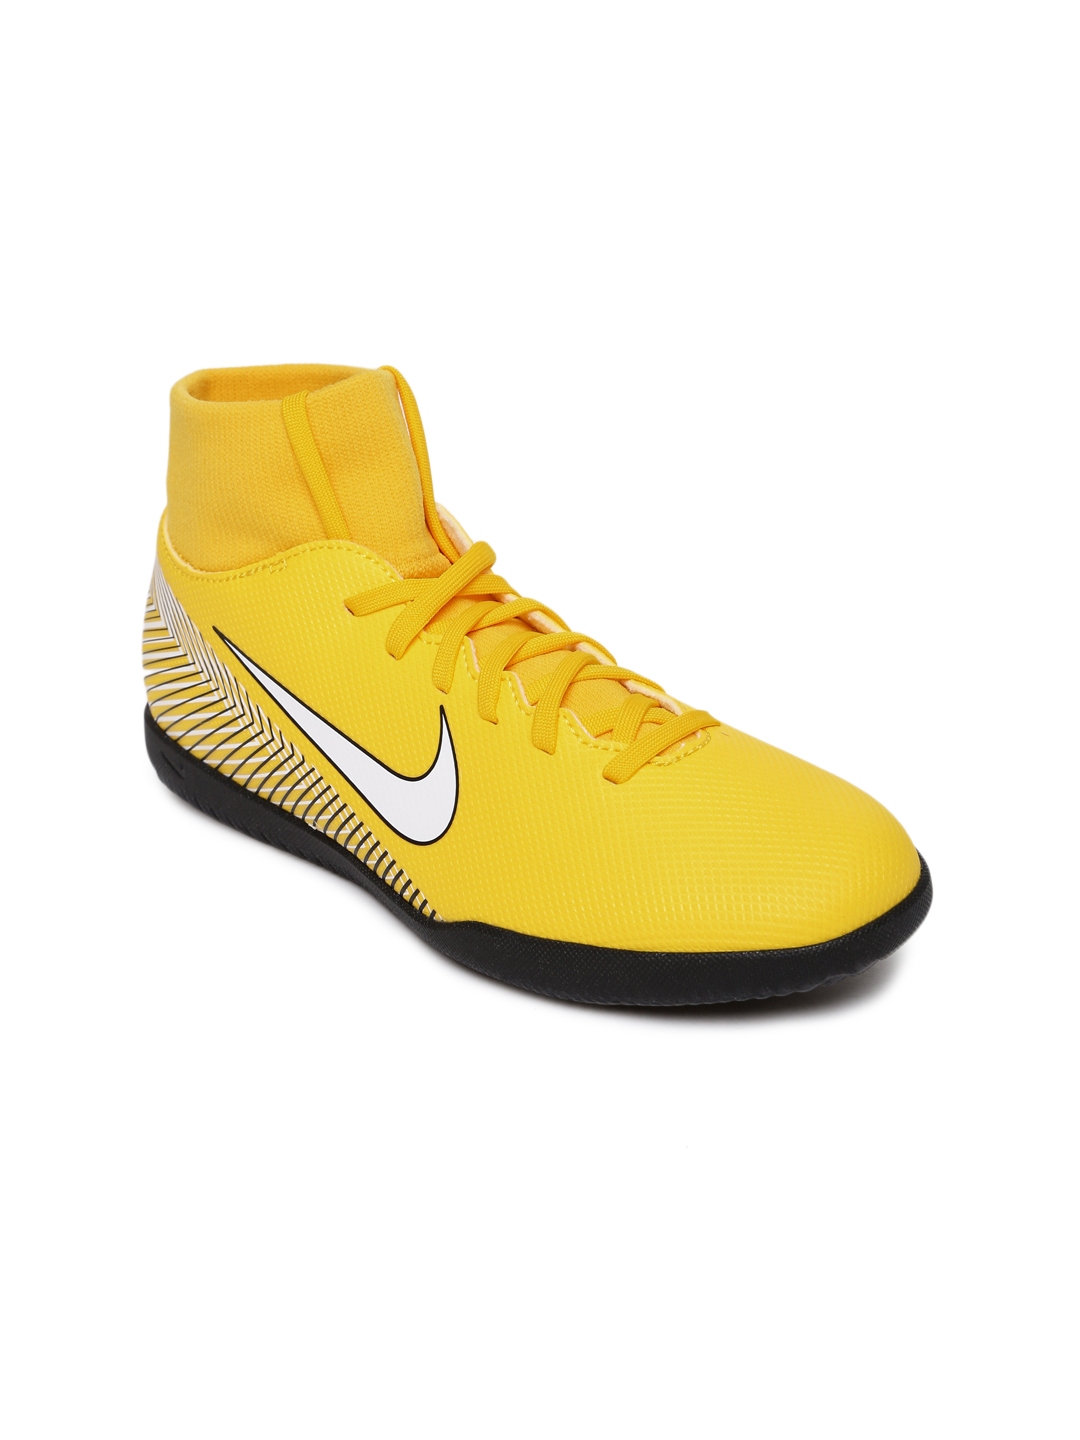 Nike Mercurial Superfly Iv Ronaldo CR7 FG Soccer Shoes